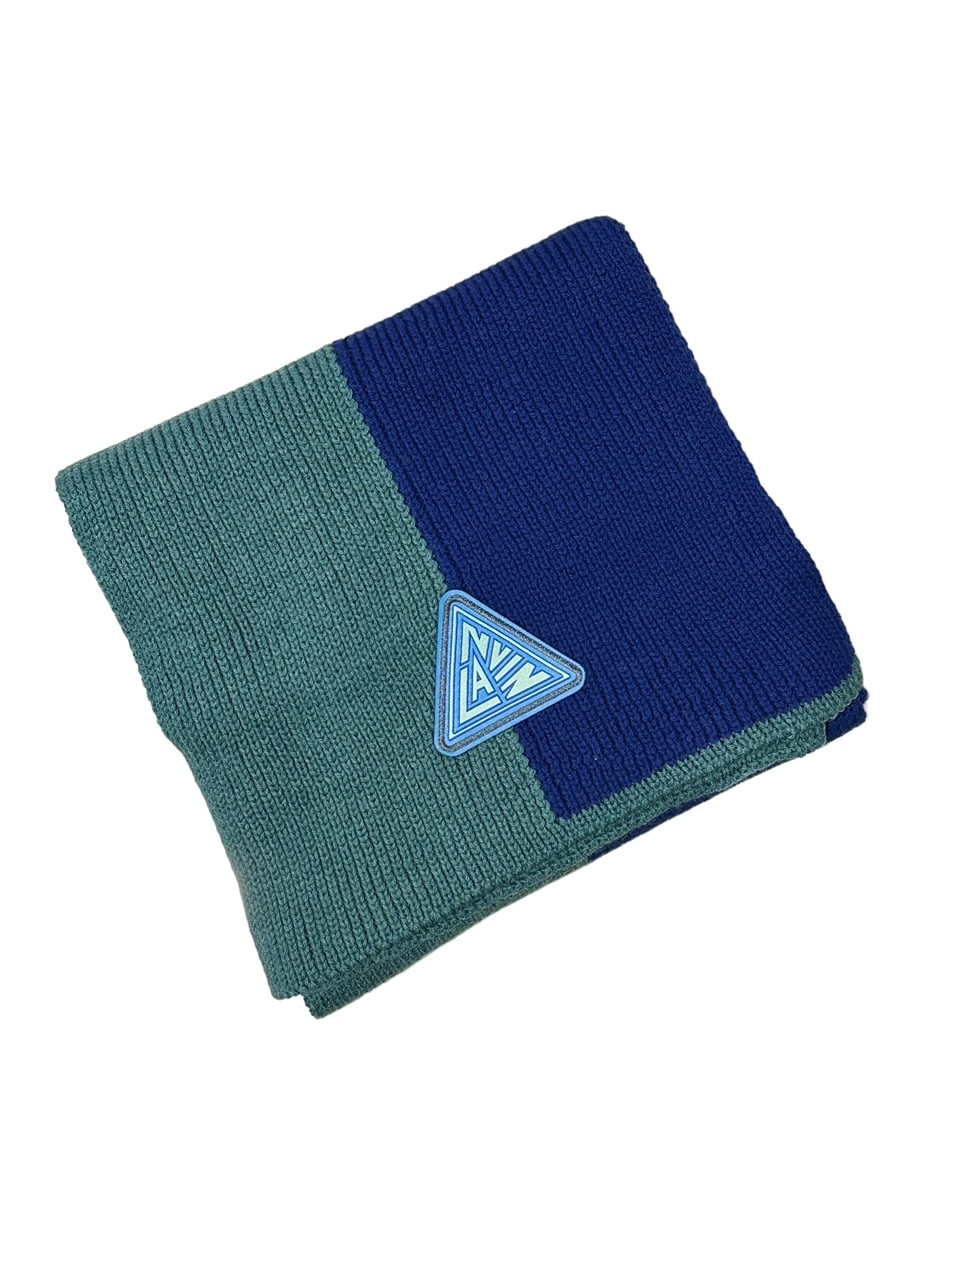 Lanvin - 100% Wool Scarf with Logo - 30x180cm - Blue /  Green-1